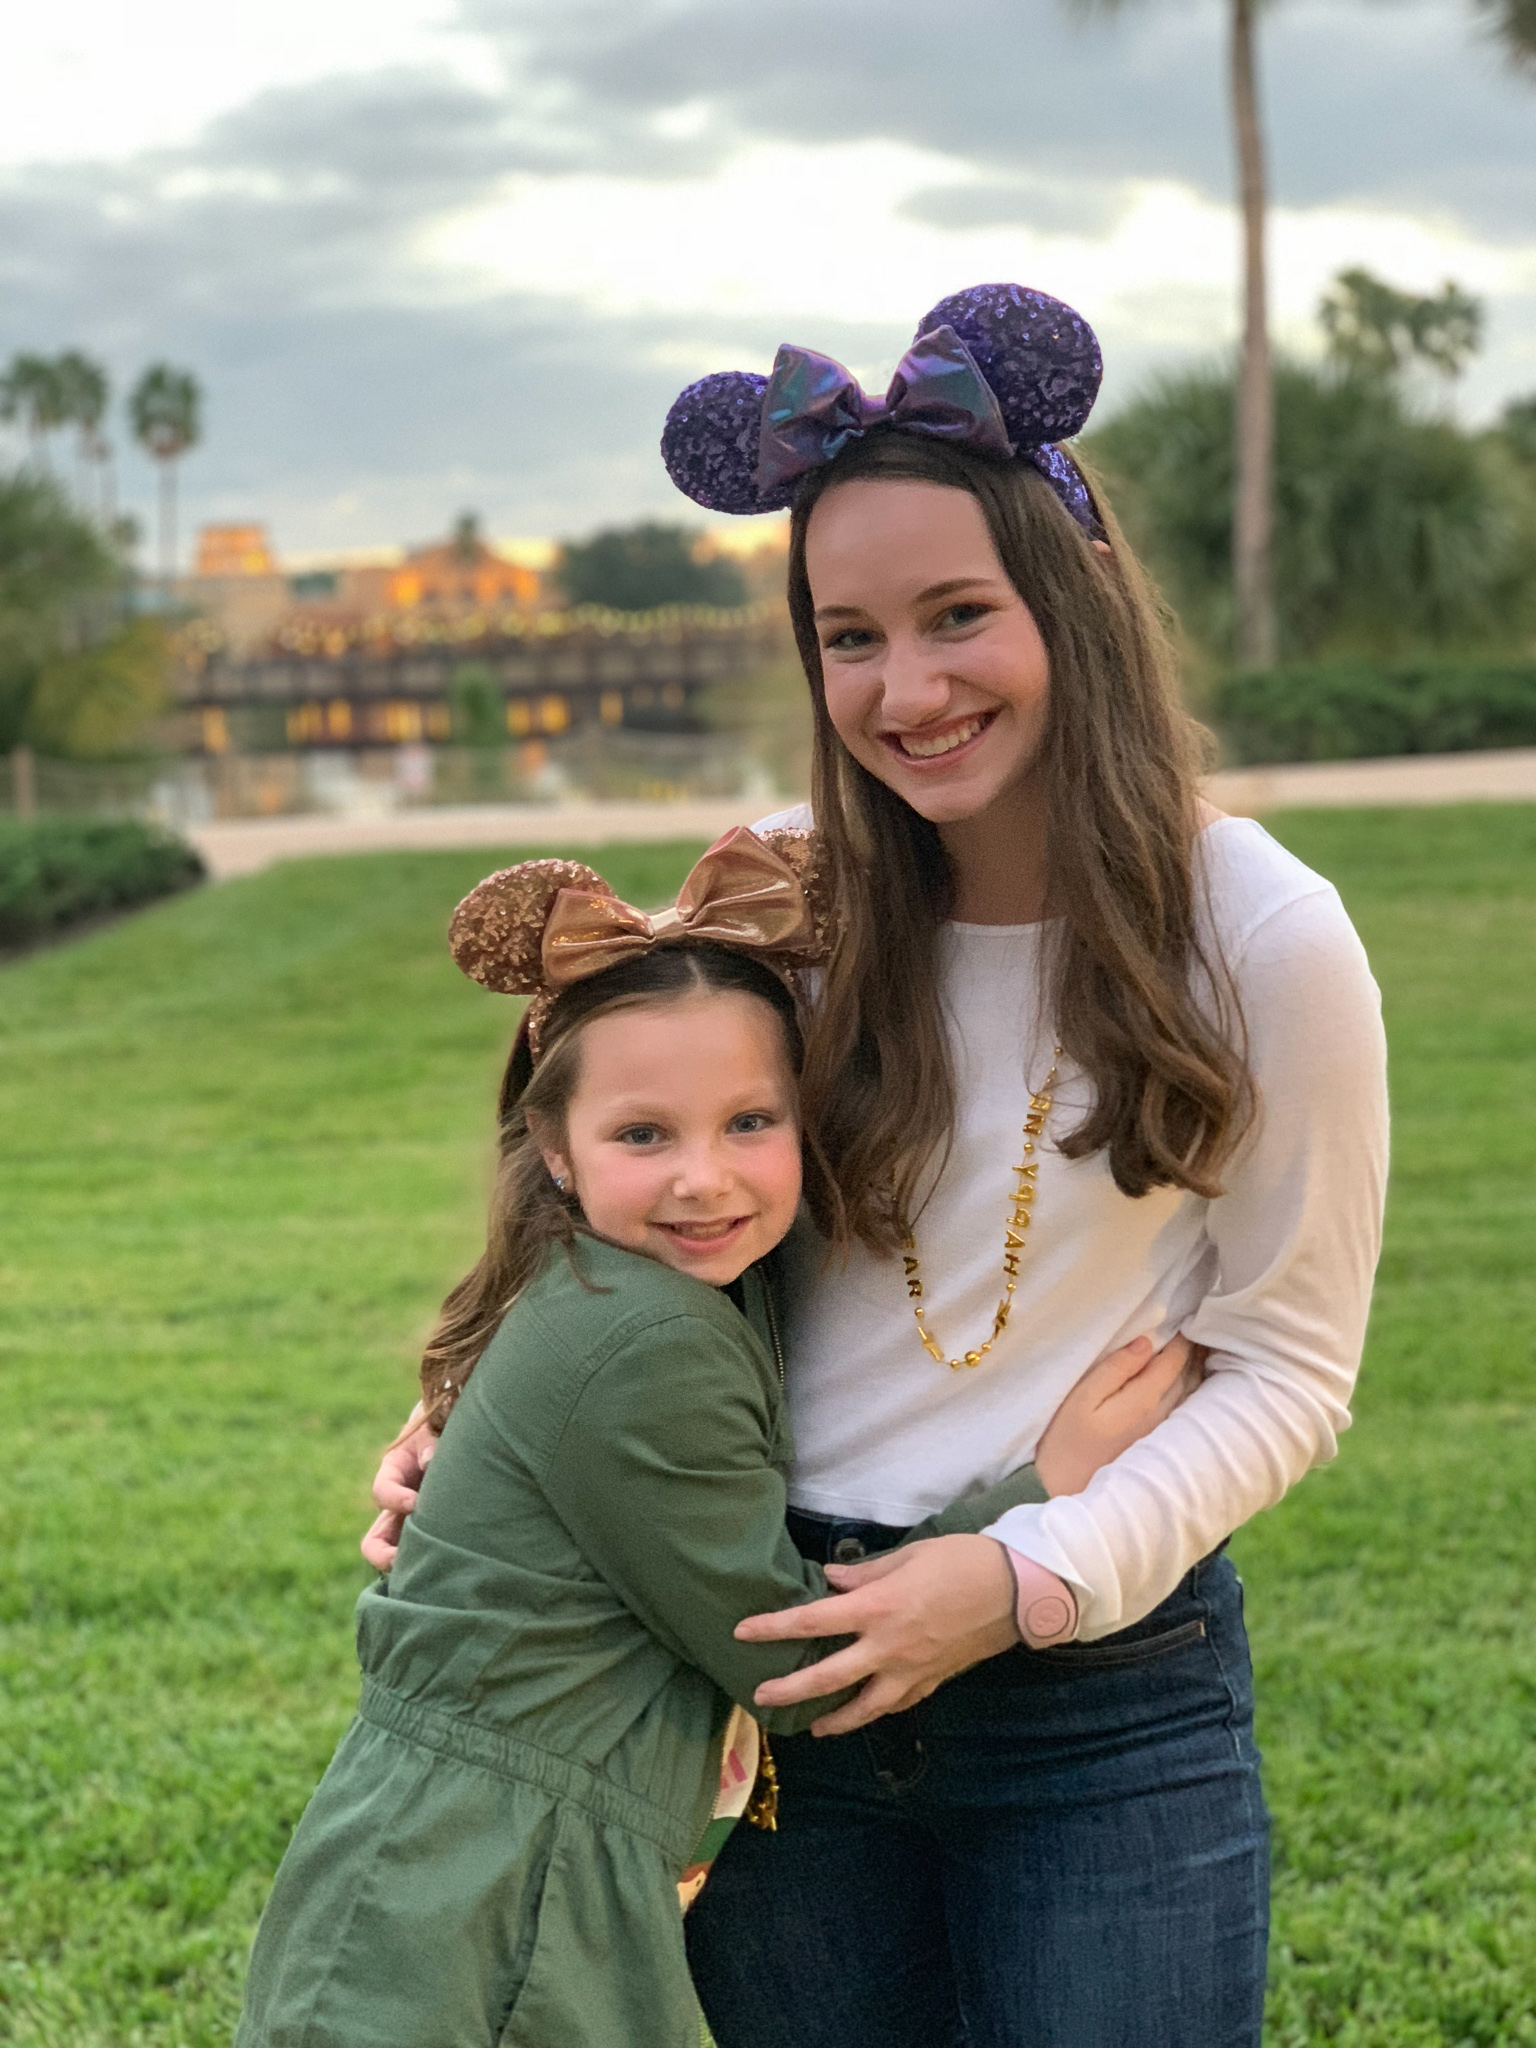 New Year's Eve at Disney World — Jessica Roams